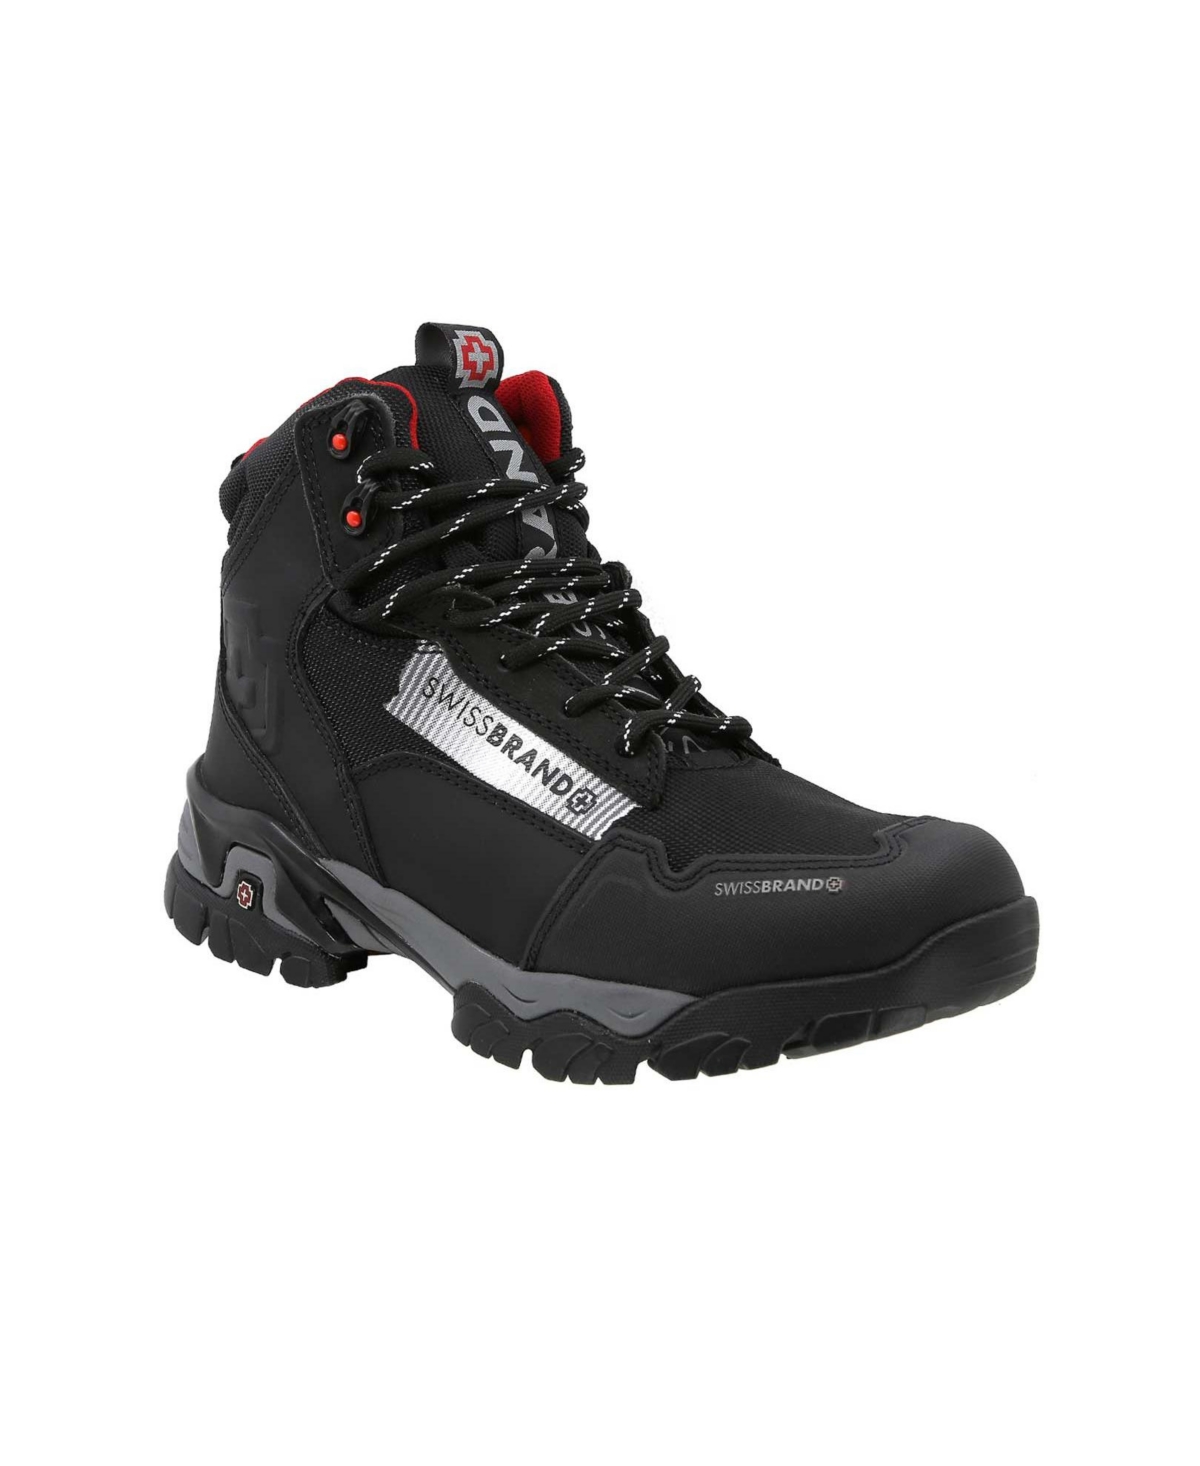 Hiking Boot Alpes Black By Swiss brand - Black